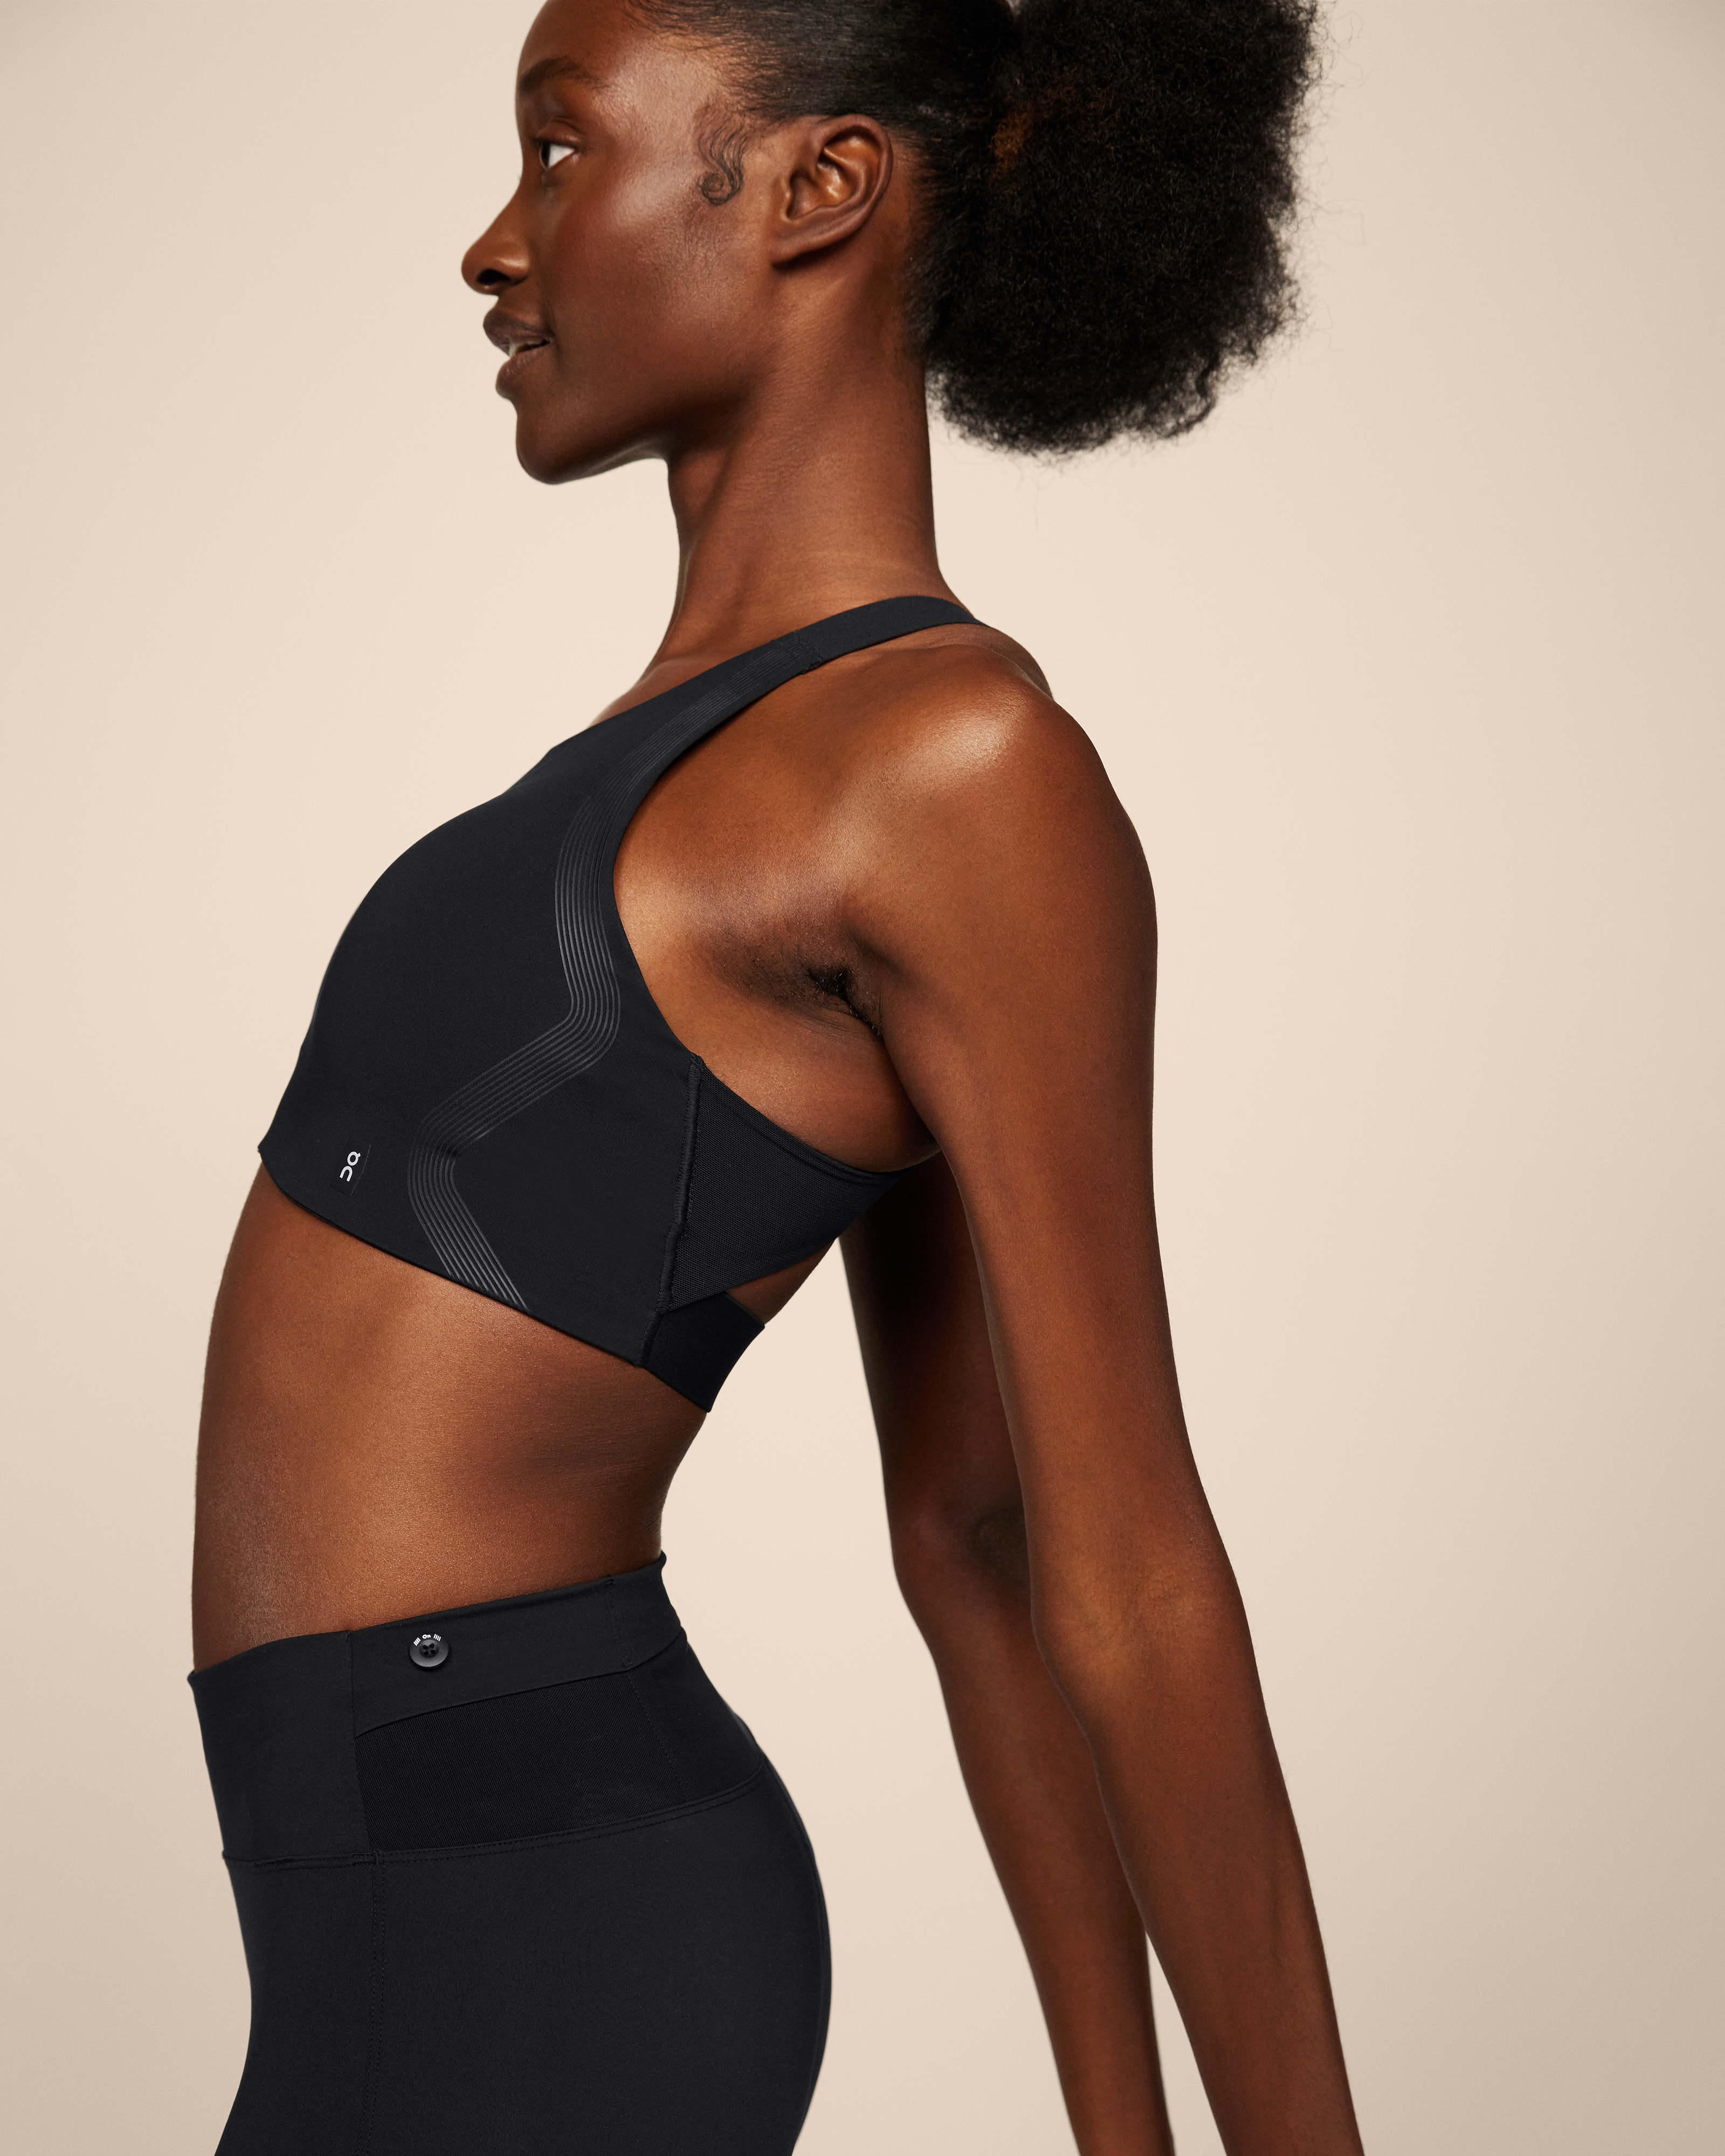 Buy Fashiol Front Button Sports Bras for Traning,Yoga,Gym Workout, Feeding,  Nursing Black at